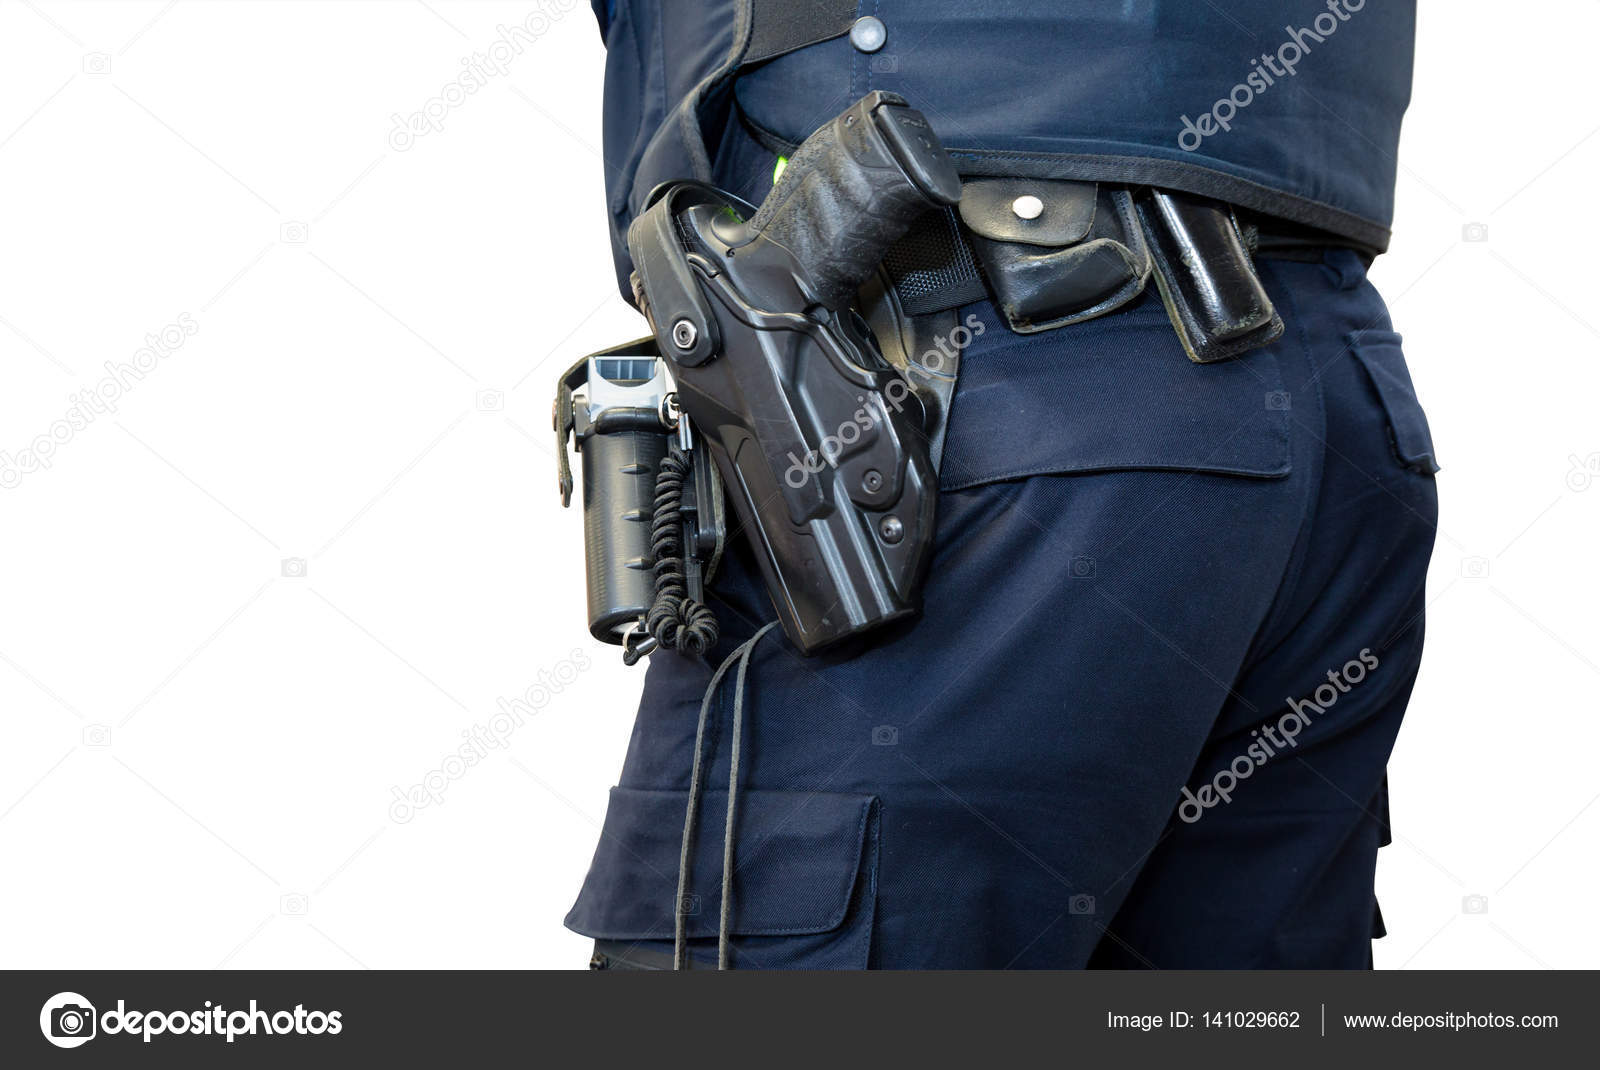 police gun belt